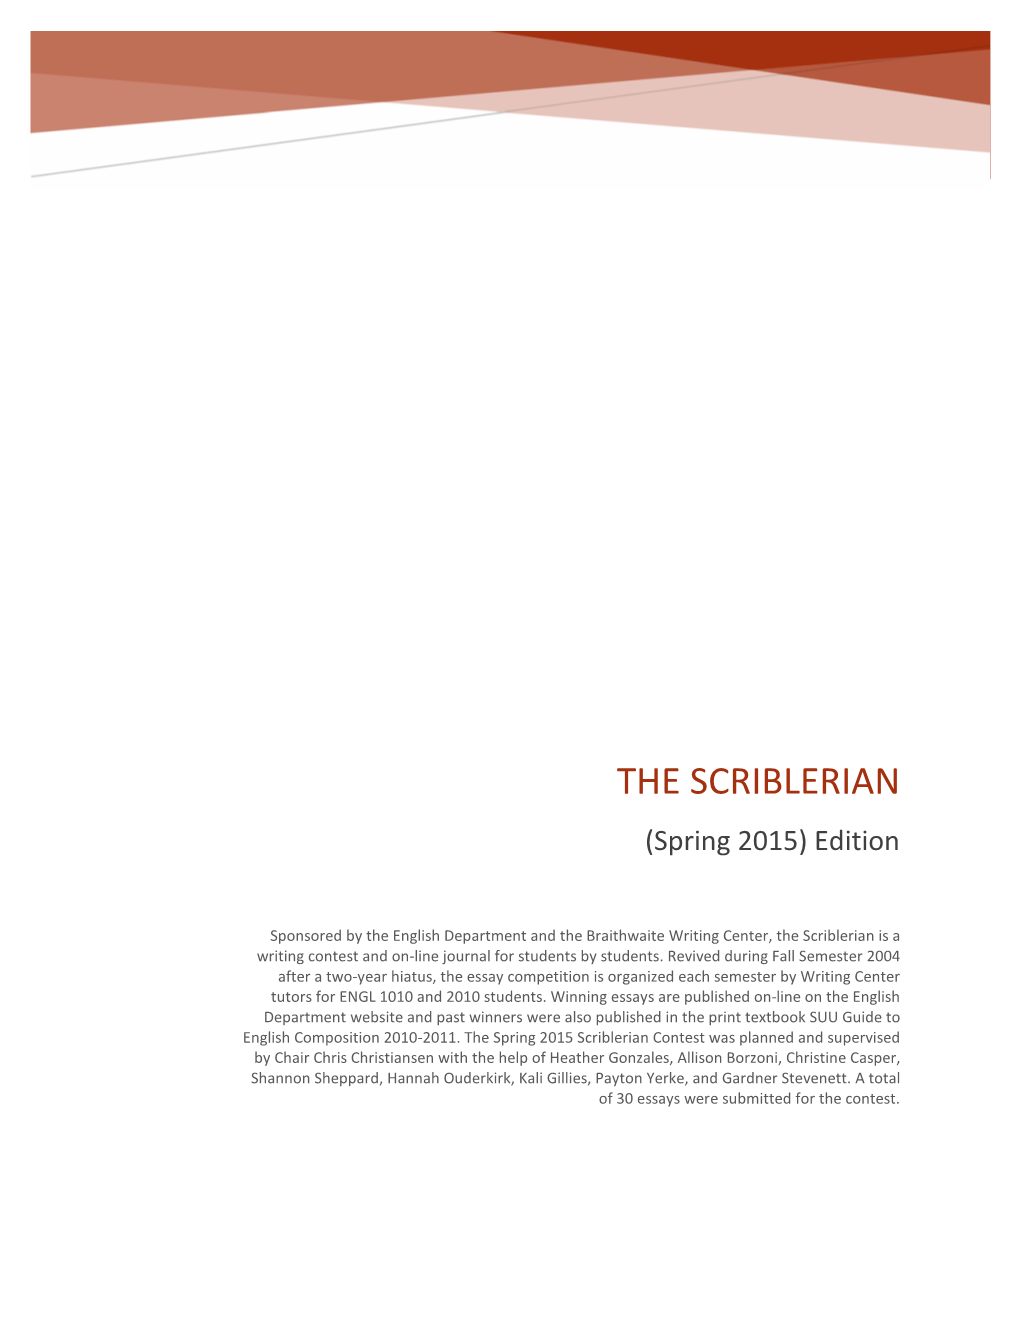 THE SCRIBLERIAN (Spring 2015) Edition